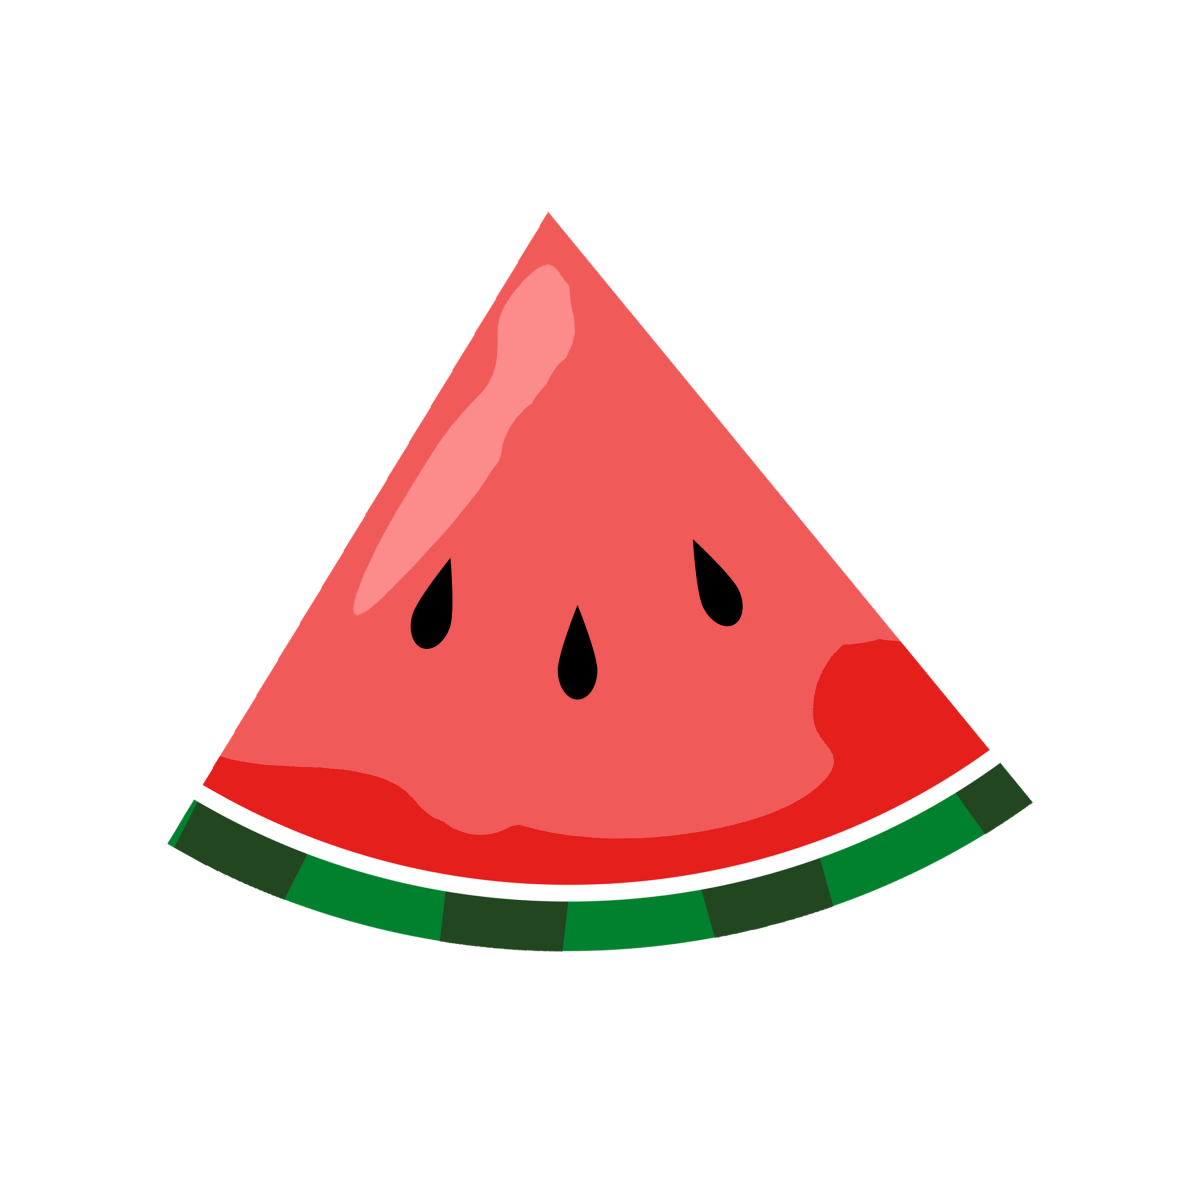 Watermelon clipart 5